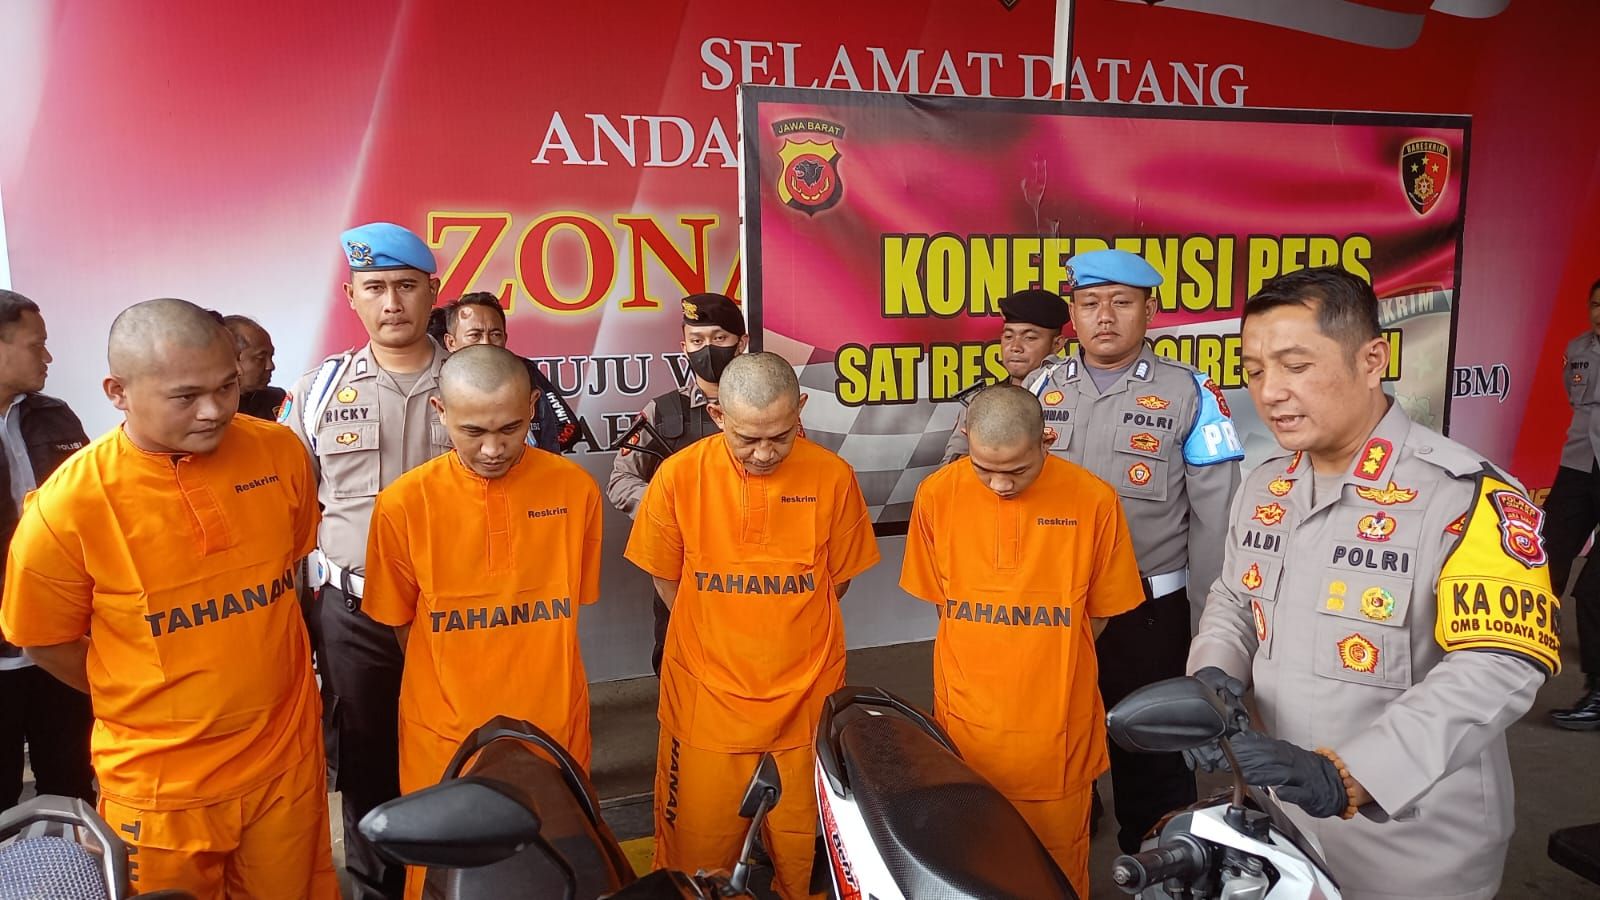 Polres Cimahi menangkap 4 orang pelaku sindikat ganjal ATM yang beroperasi di wilayah Jawa Barat.